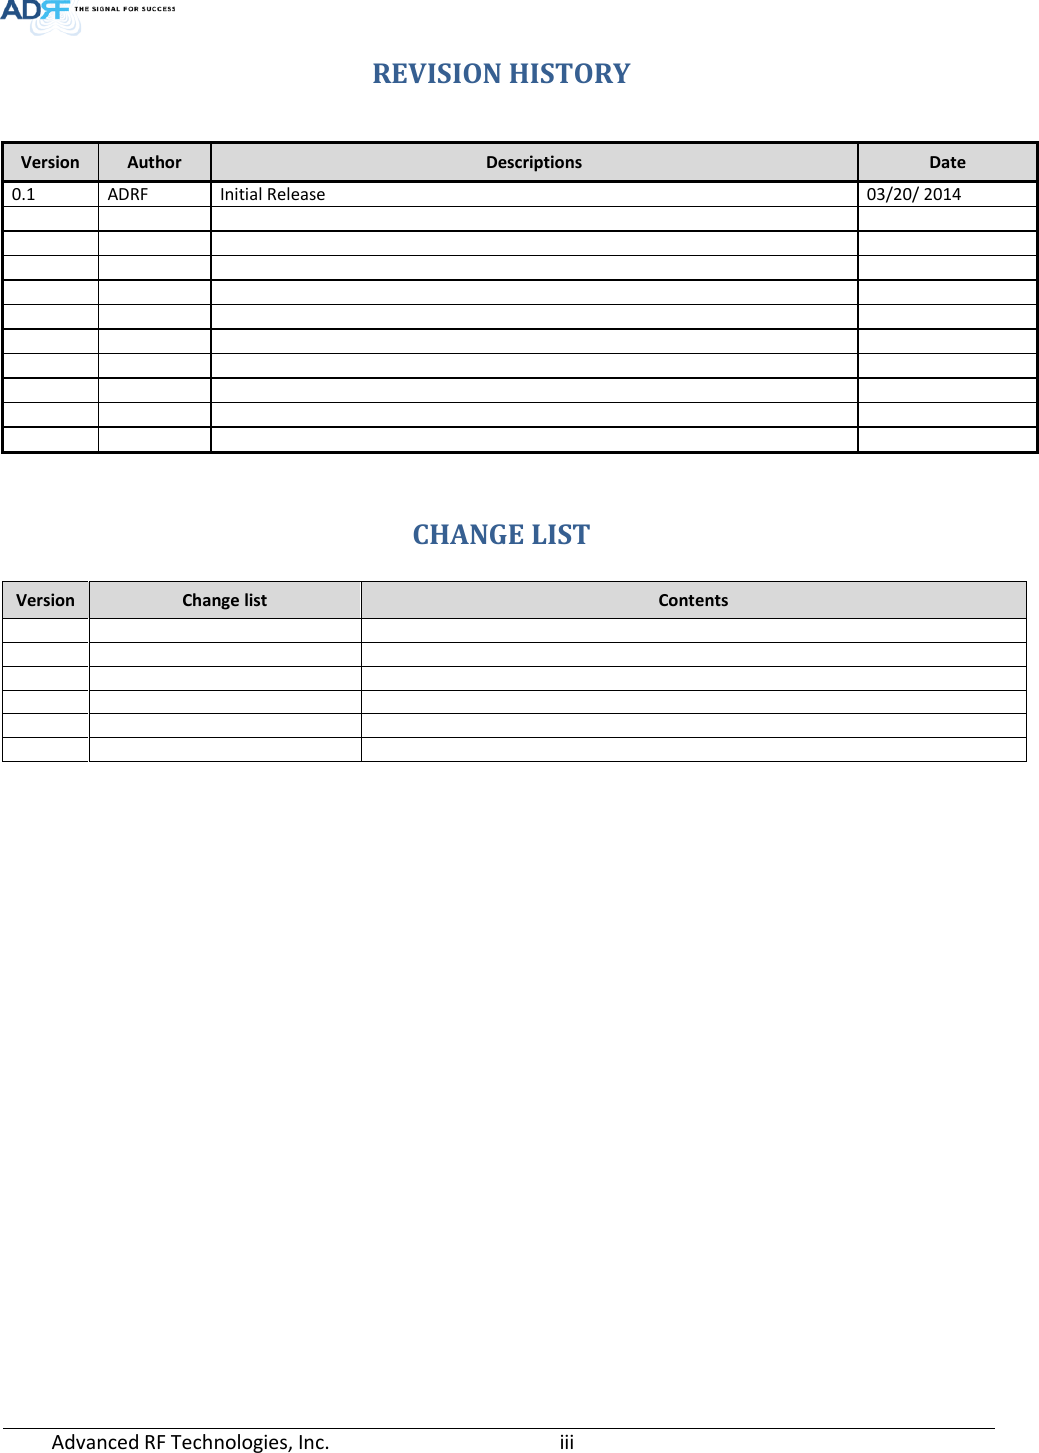  REVISION HISTORY   CHANGE LIST Version Change list Contents                      Version Author Descriptions  Date 0.1 ADRF Initial Release 03/20/ 2014                                         Advanced RF Technologies, Inc.       iii    